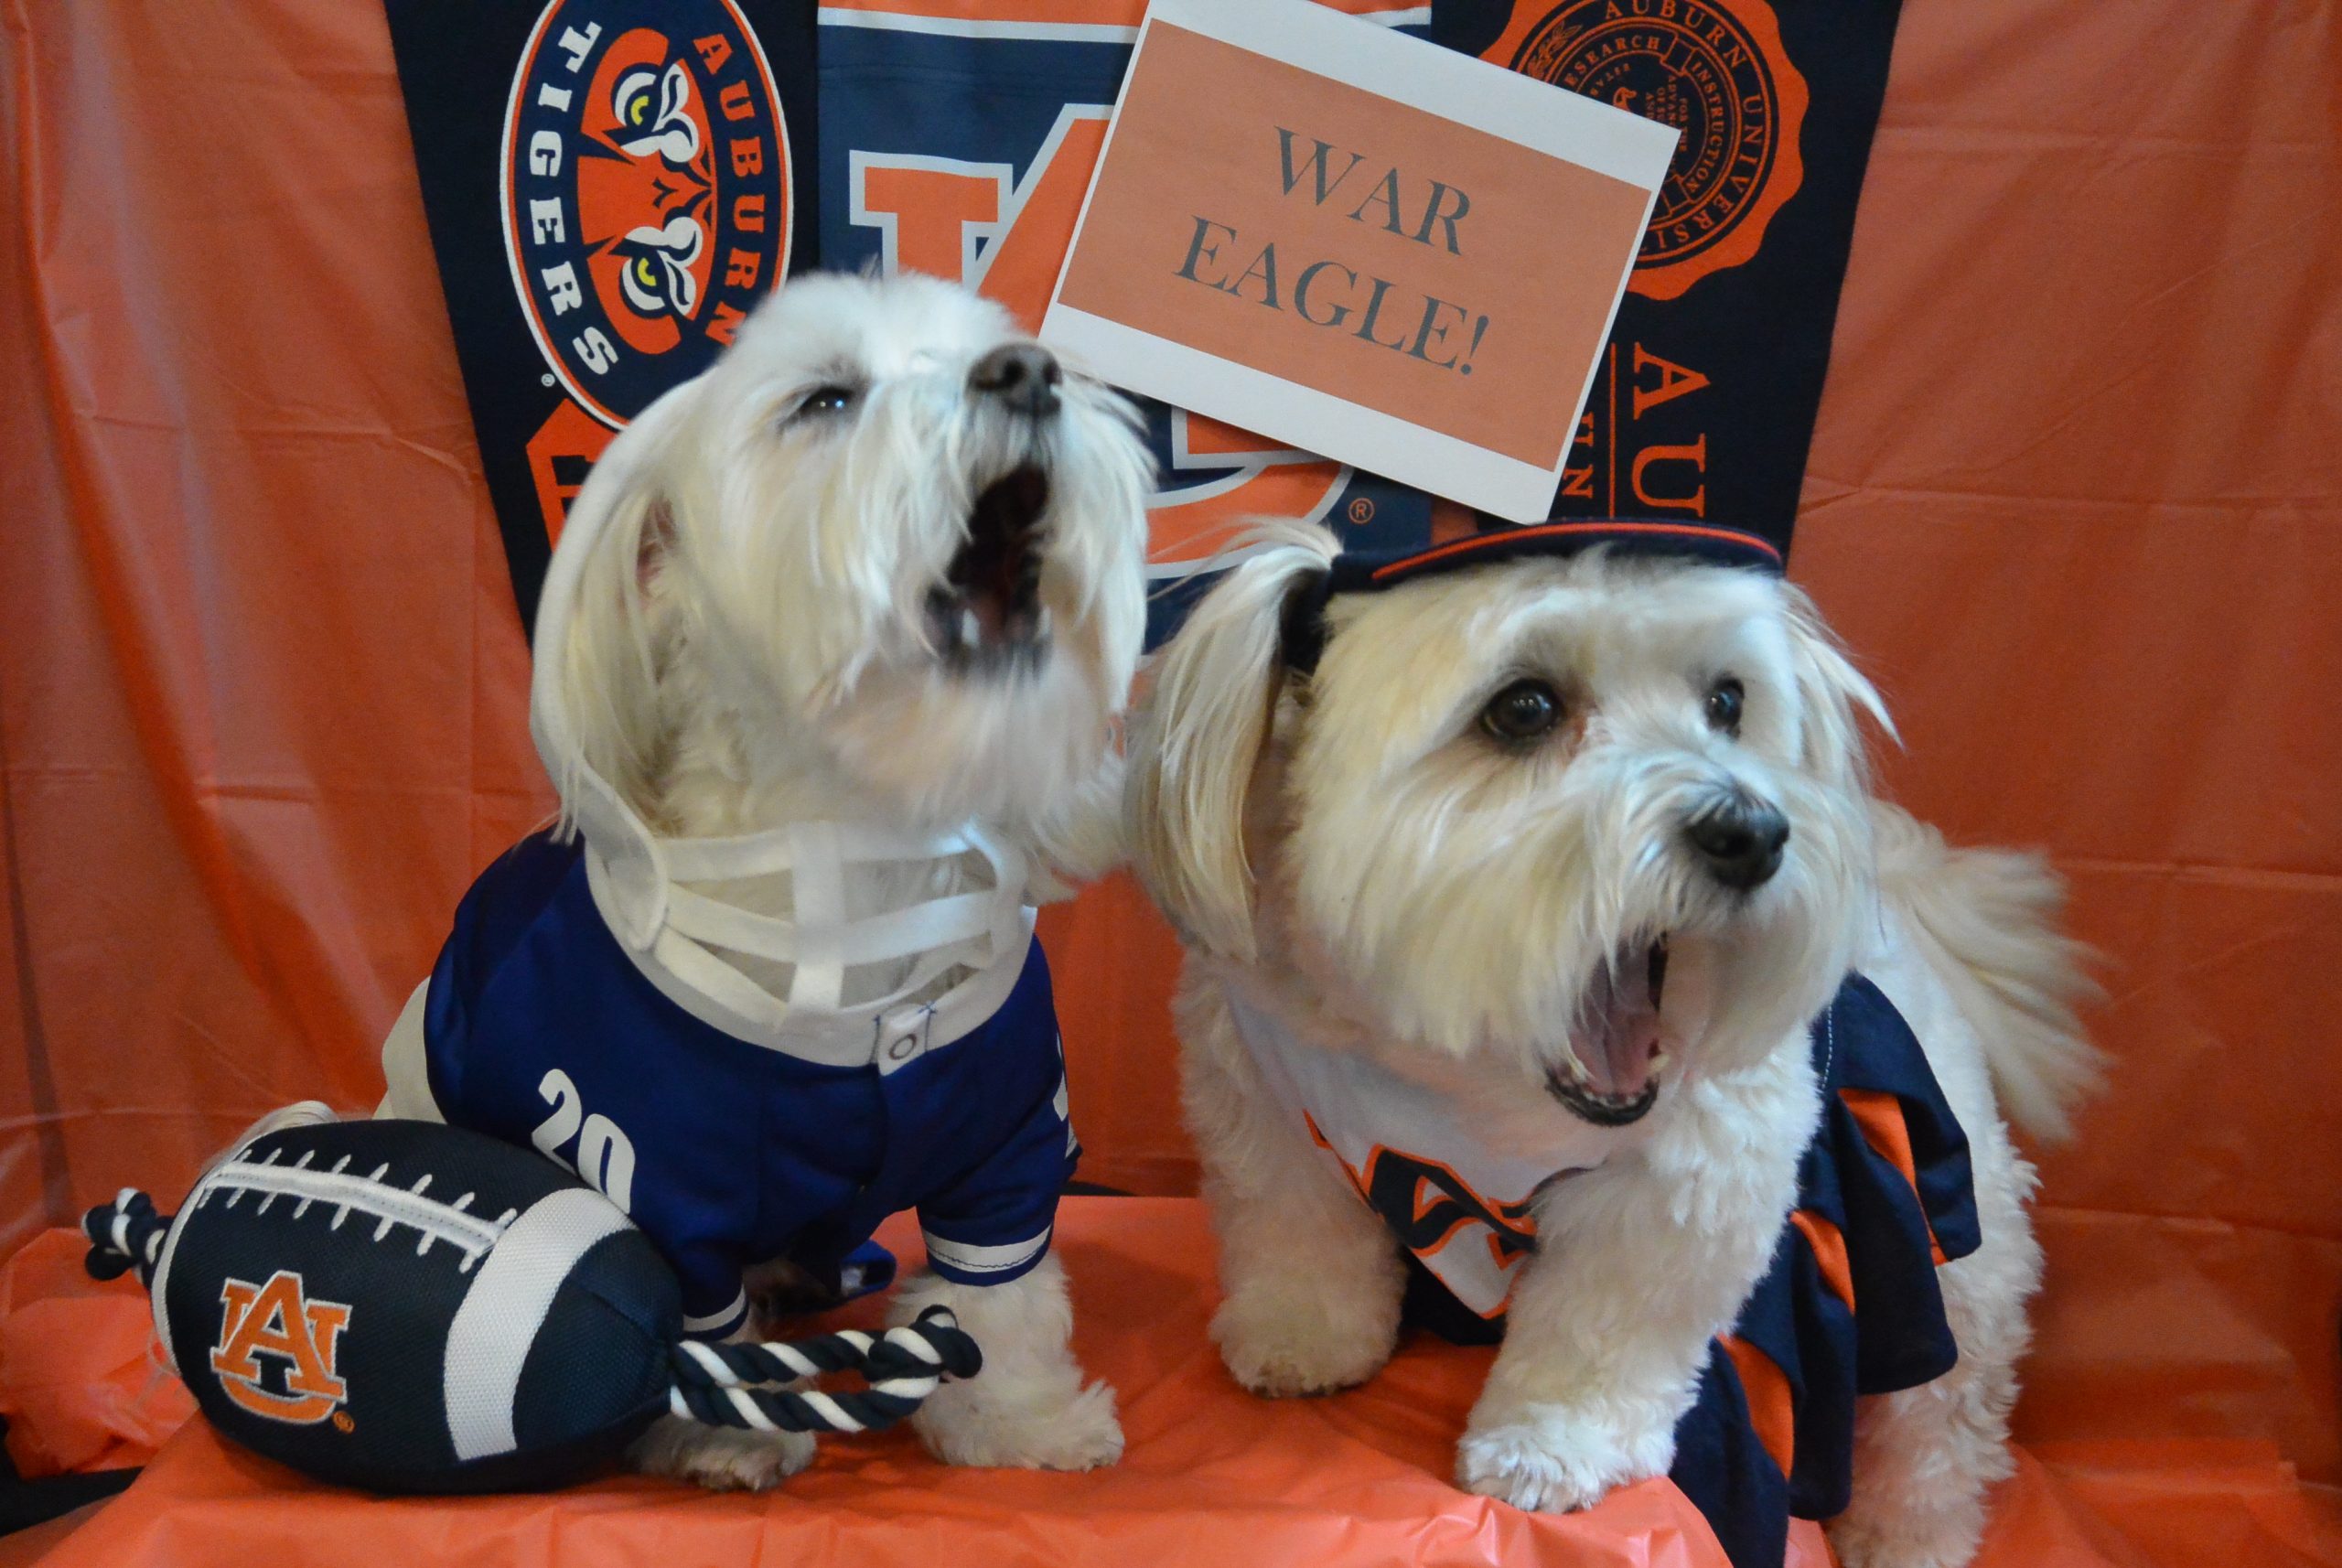 Auburn University "War beagle & tailgating"